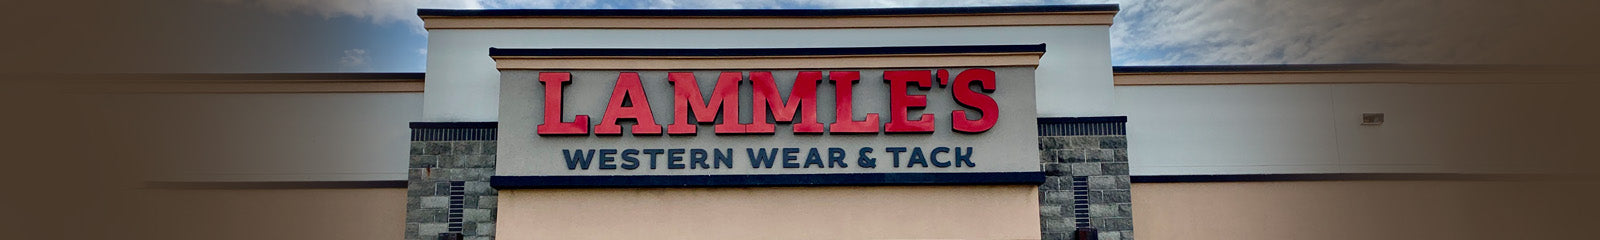 Lammle's Western Wear - Shop in store and online at www.lammles.com